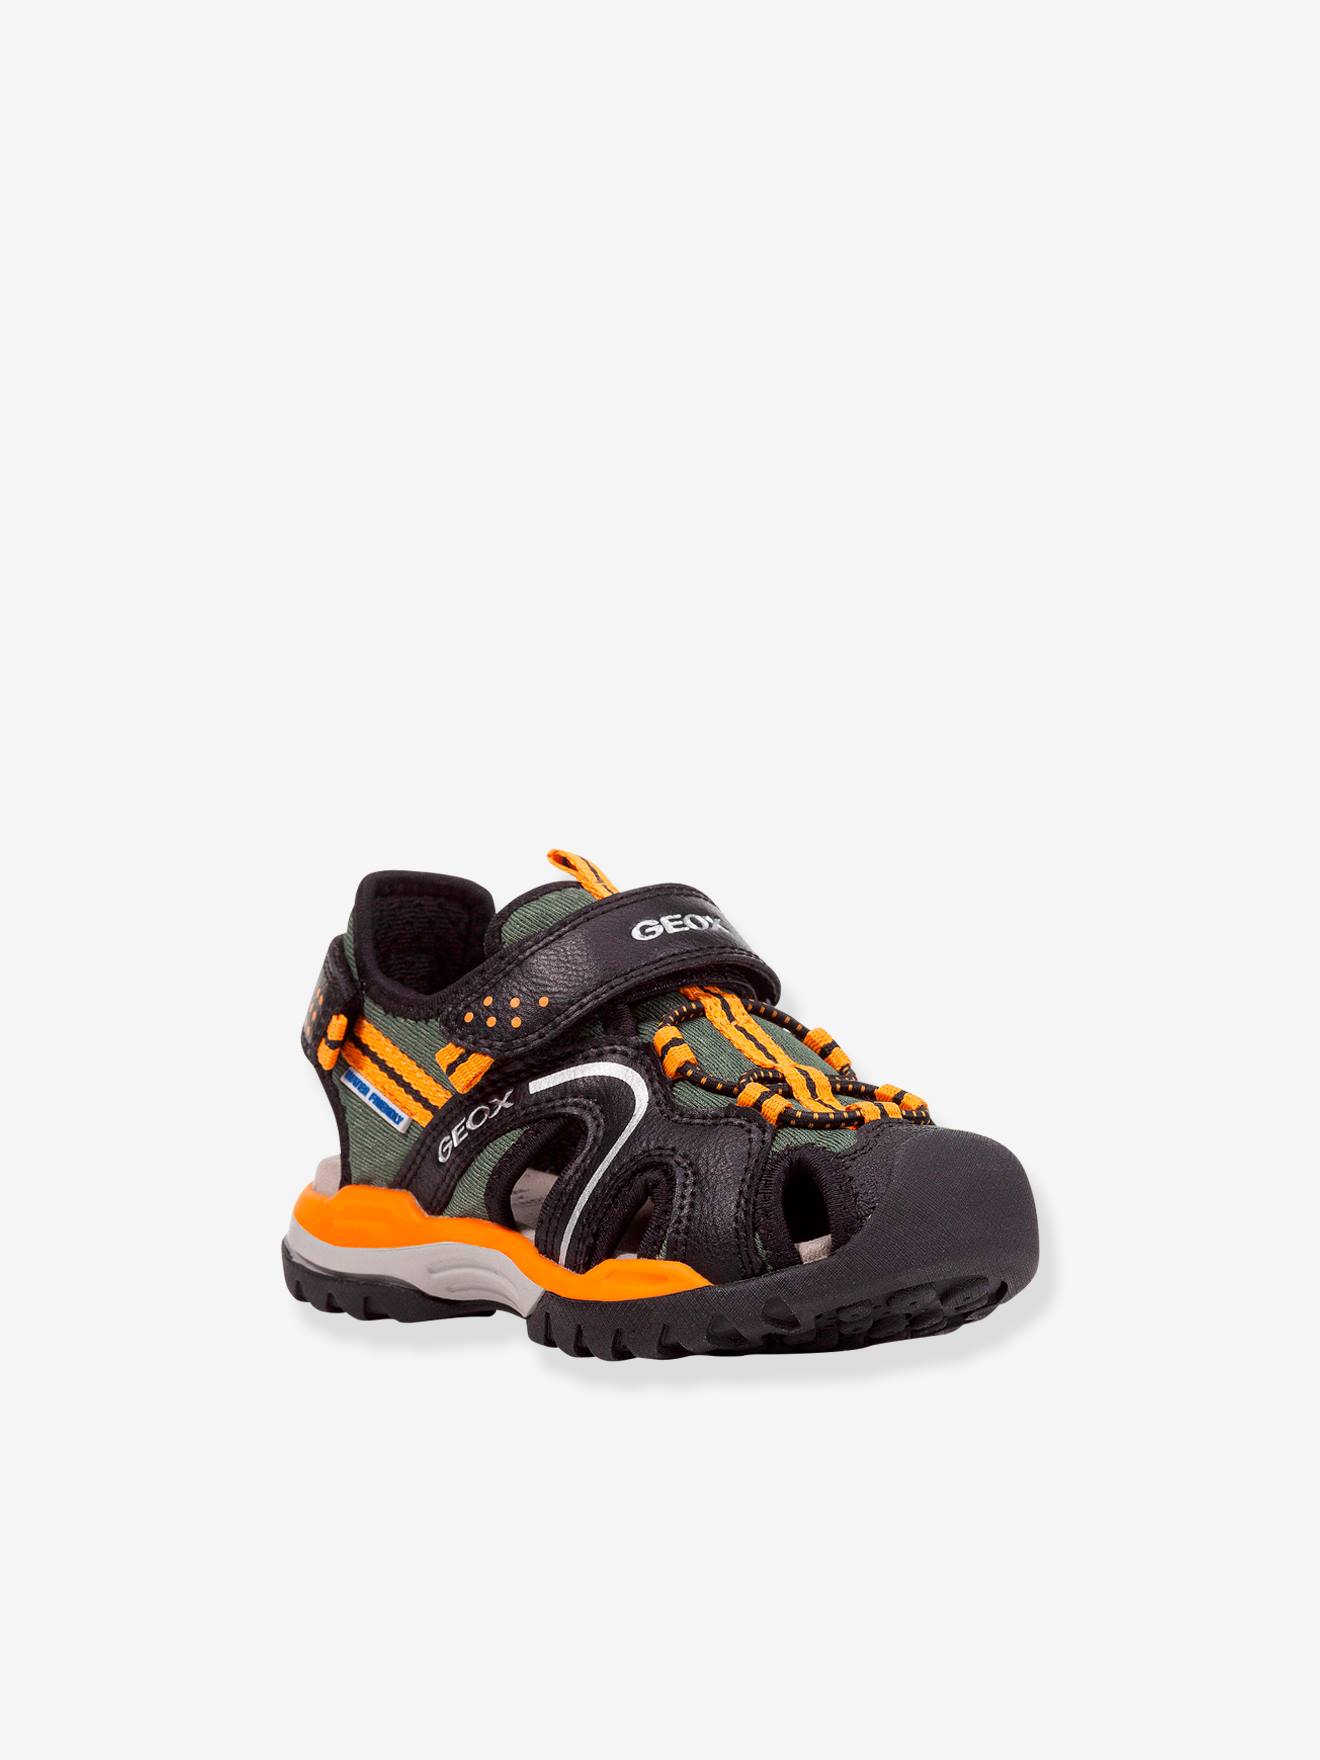 Sandals for Boys, J. GEOX® solid, Borealis - dark Shoes by B.B black